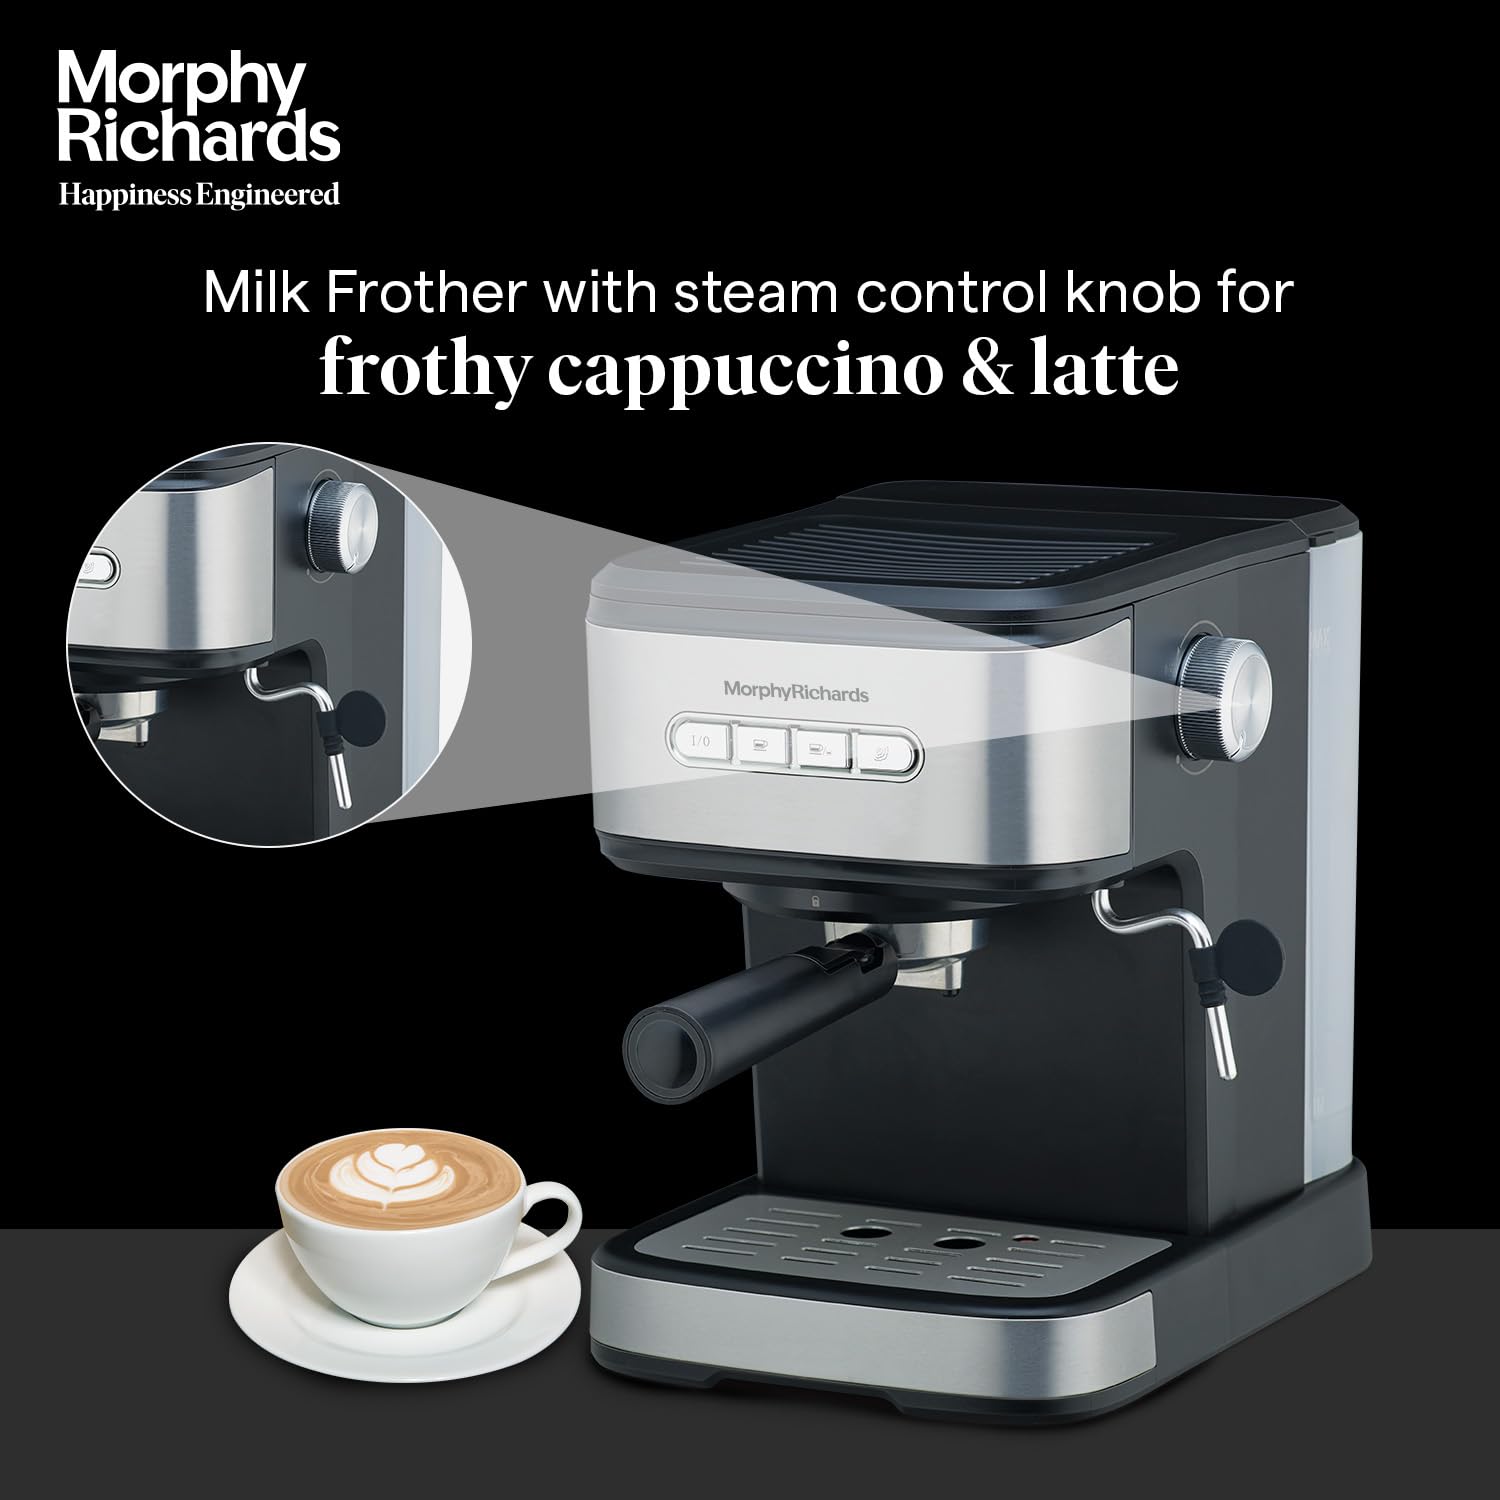 Morphy Richards Impresso Coffee Making Machine|Upto 20 Bar Pressure Rich Espresso Coffee Maker Mahajan Electronics Online